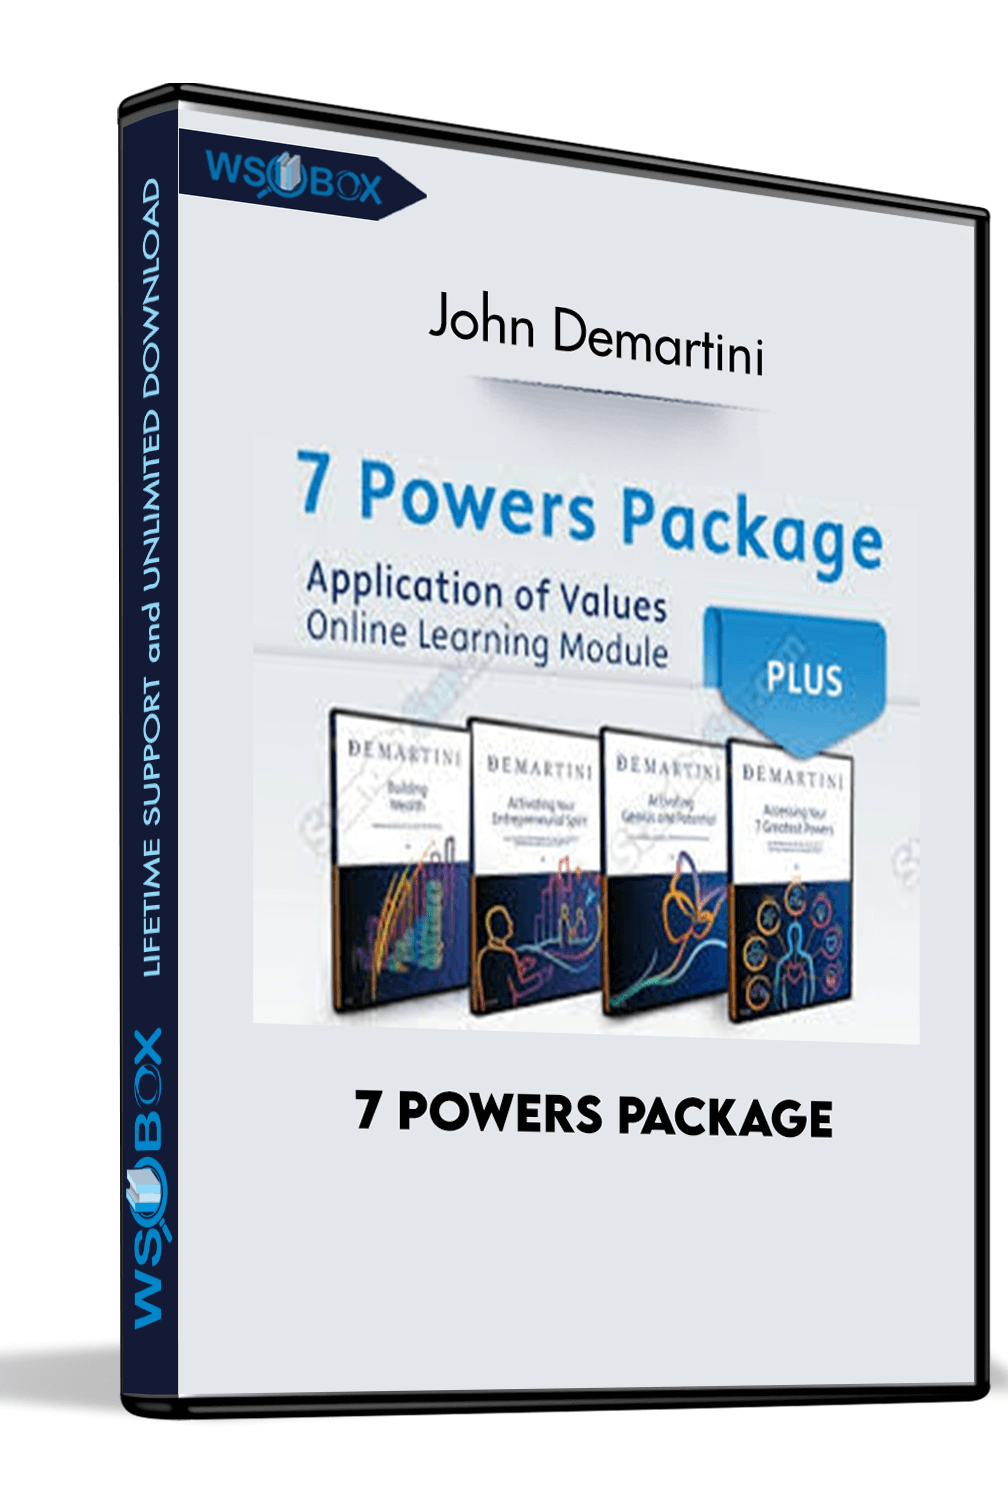 7 Powers Package – John Demartini